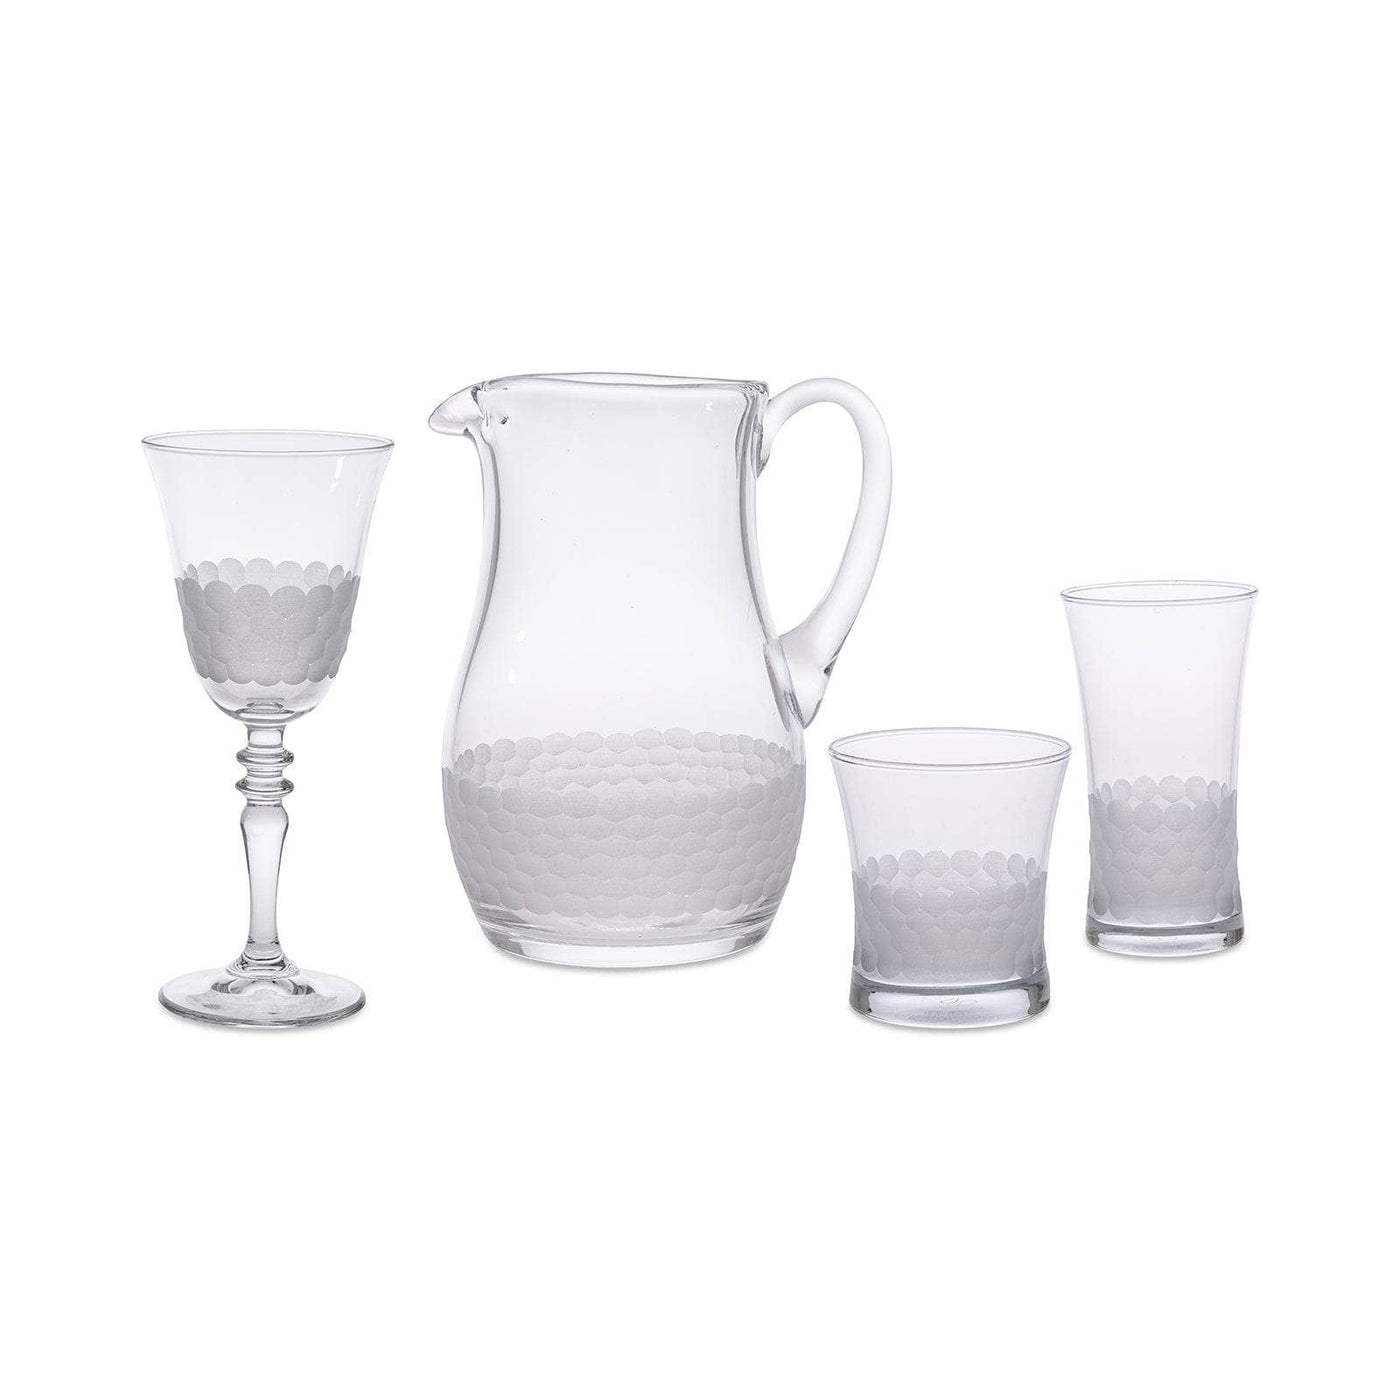 Bermondsey Glass Jug, White, 1.75 L Pots & Jugs & Pitchers sazy.com